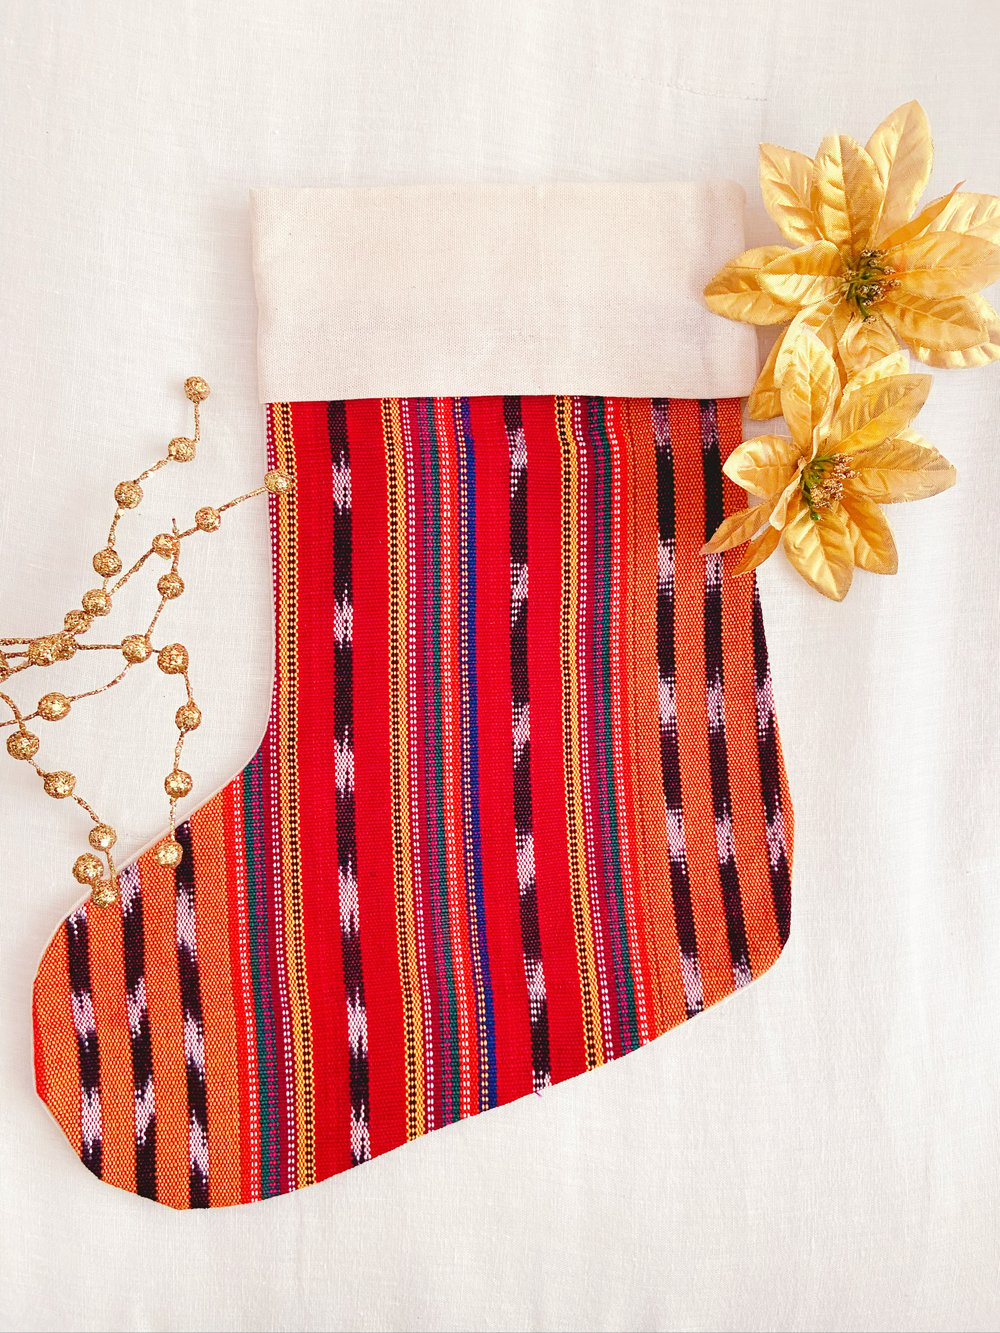 Guatemalan Textile Christmas Stockings